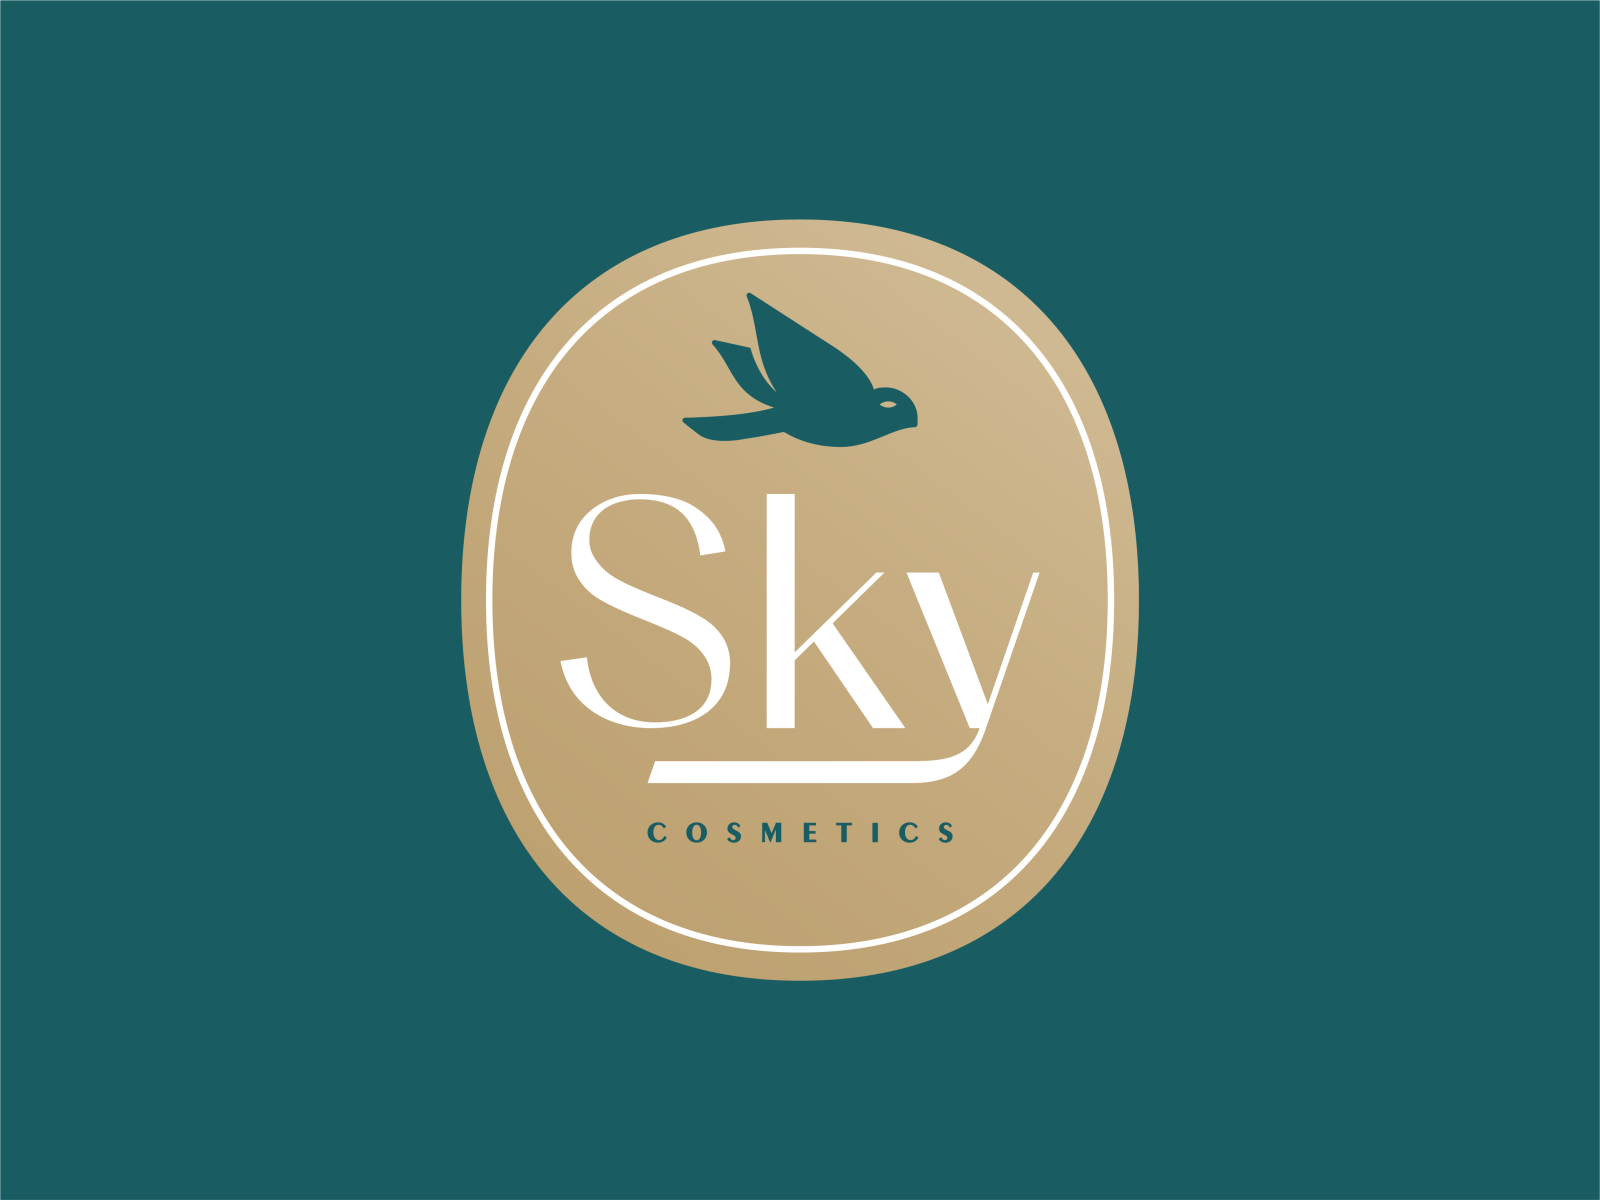 Sky Cosmetics by Aleksandar Savic / almigor on Dribbble